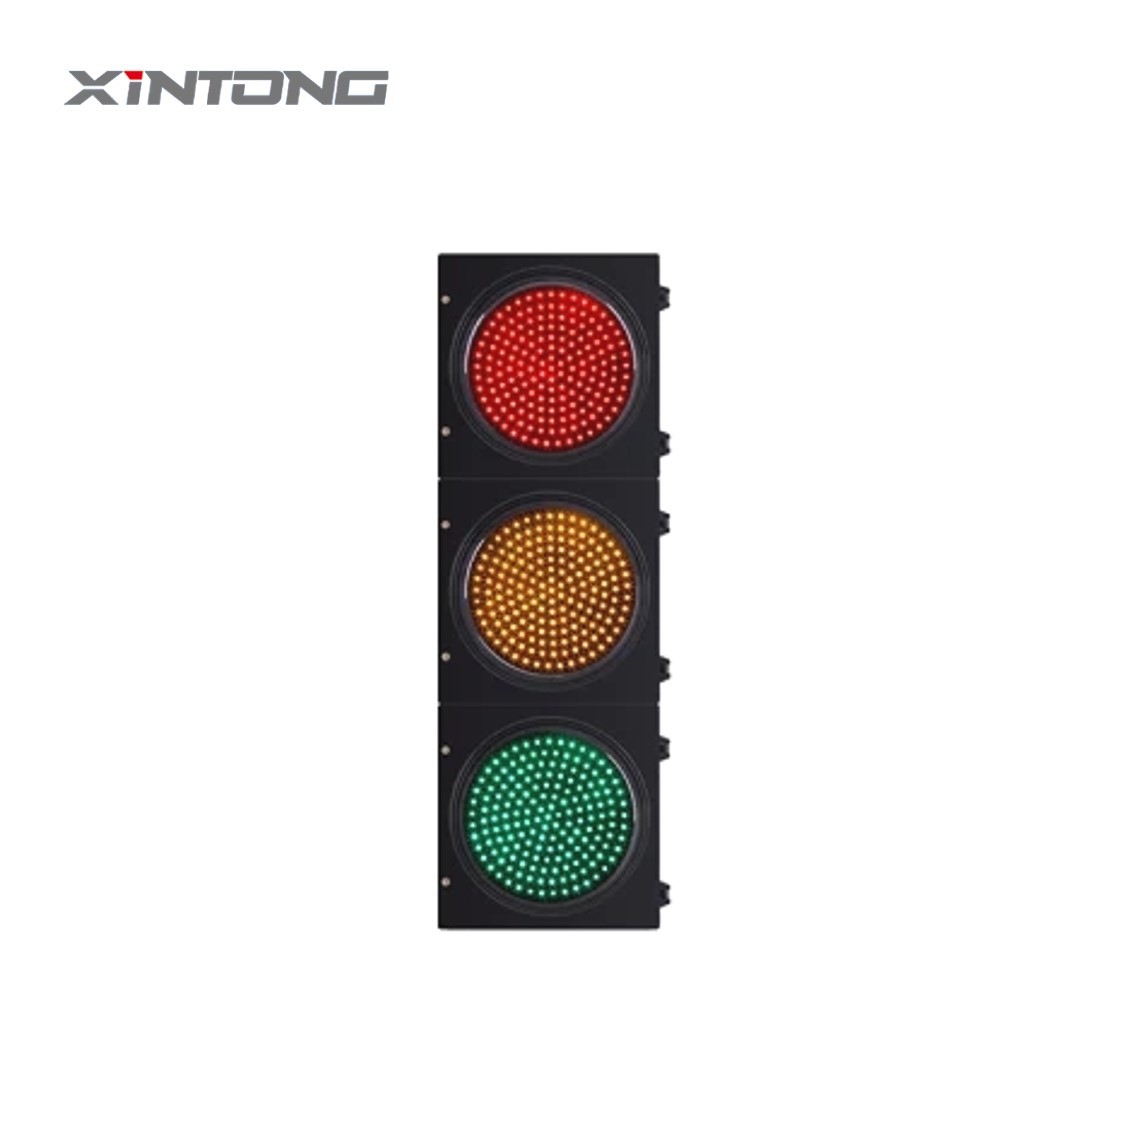 IP66 semaforo Intelligent LED Traffic Signal Light 1